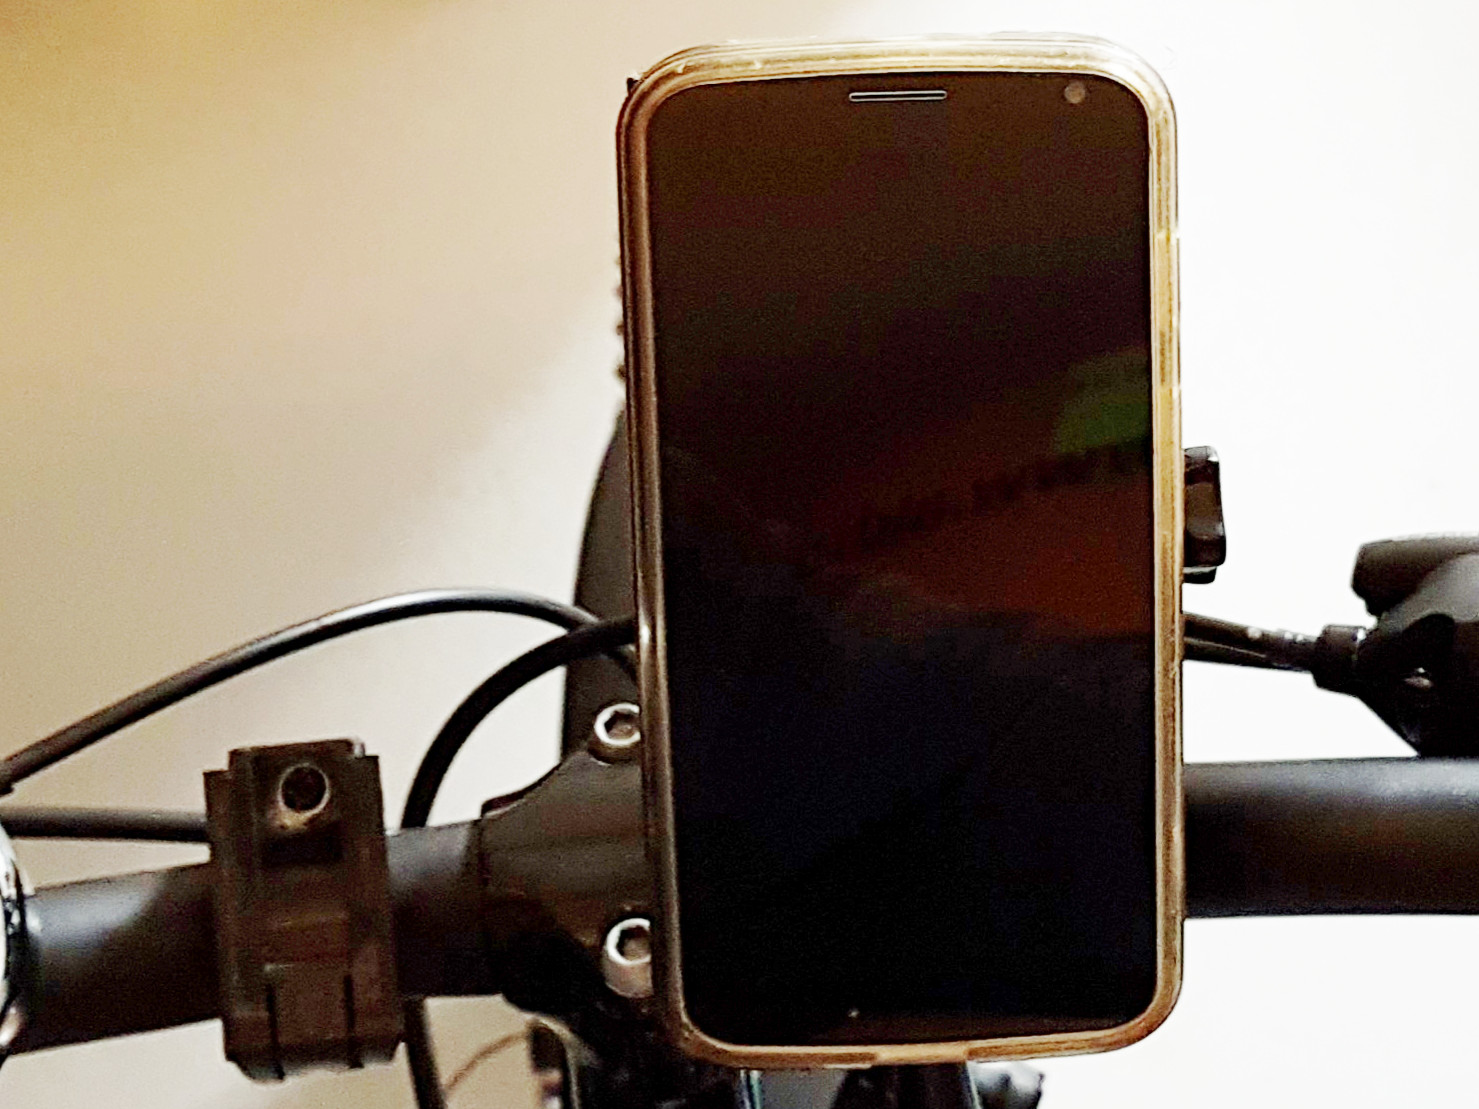 Phone holder plate to GoPro mount adapter for velcro fastener tape